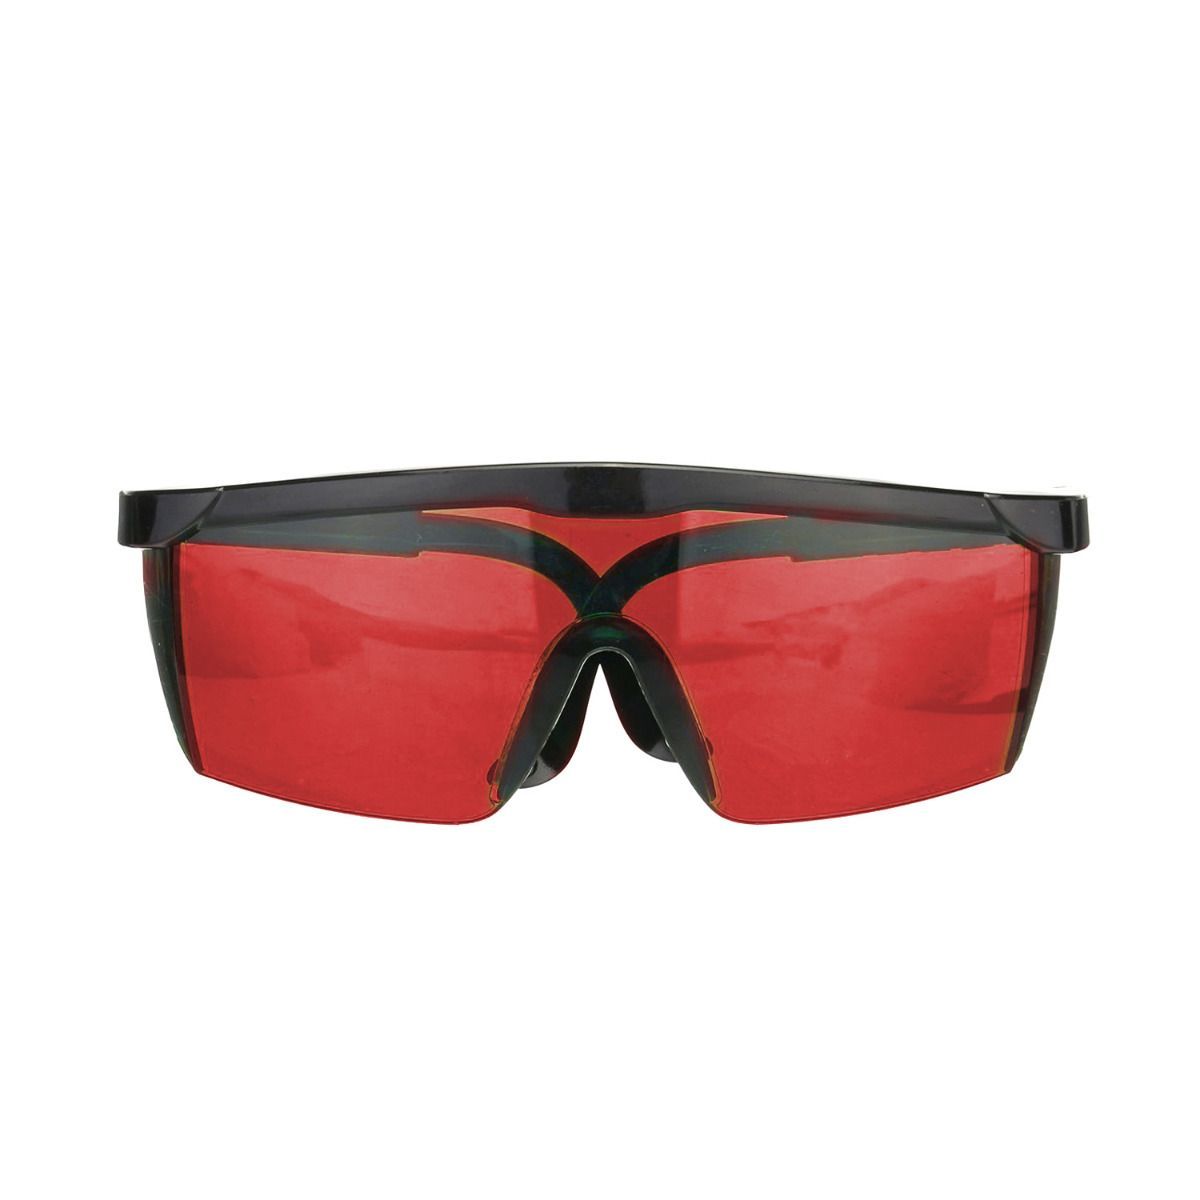 Intex TruLine™ Red Safety Glasses - Suit Laser Levels